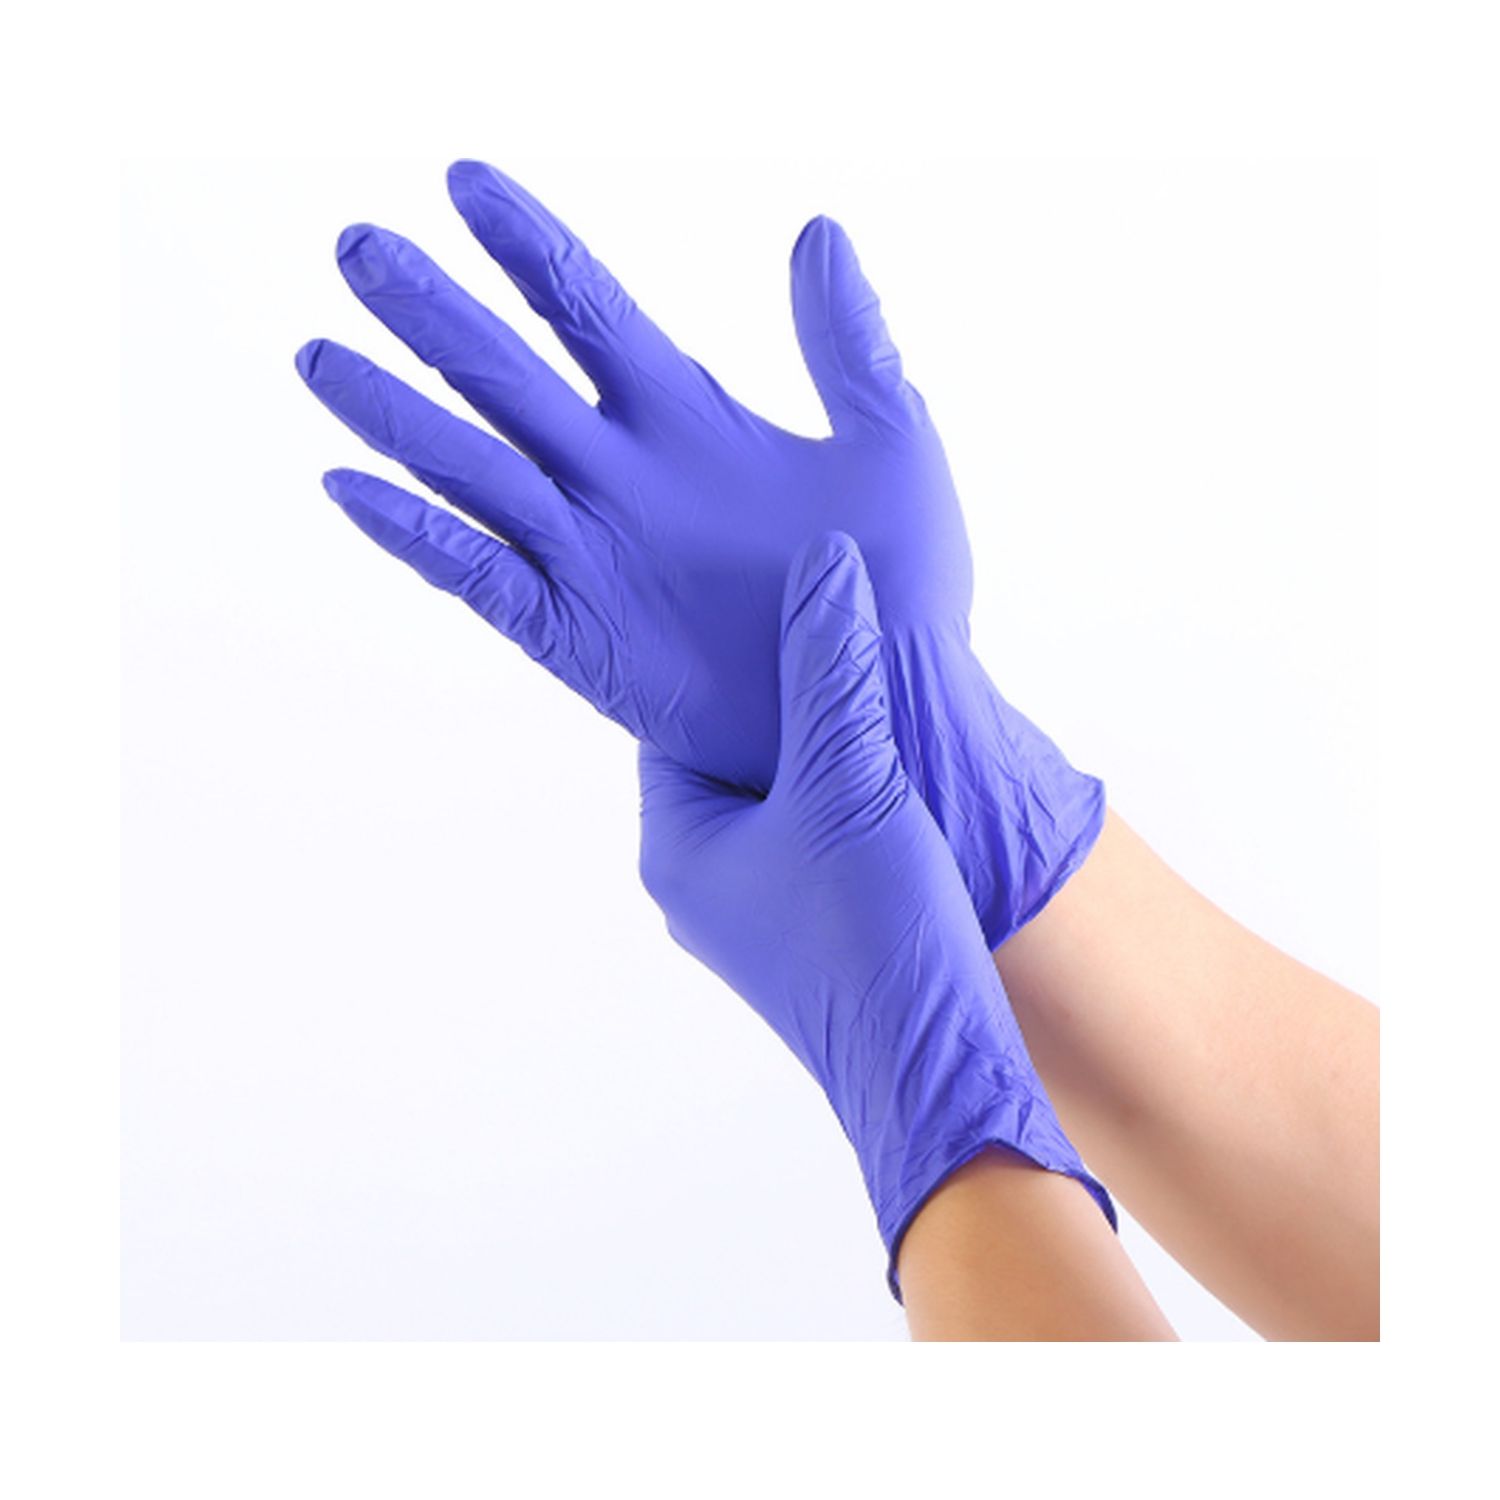 Comprar guantes nitrilo sin polvo Talla L | Naturitas